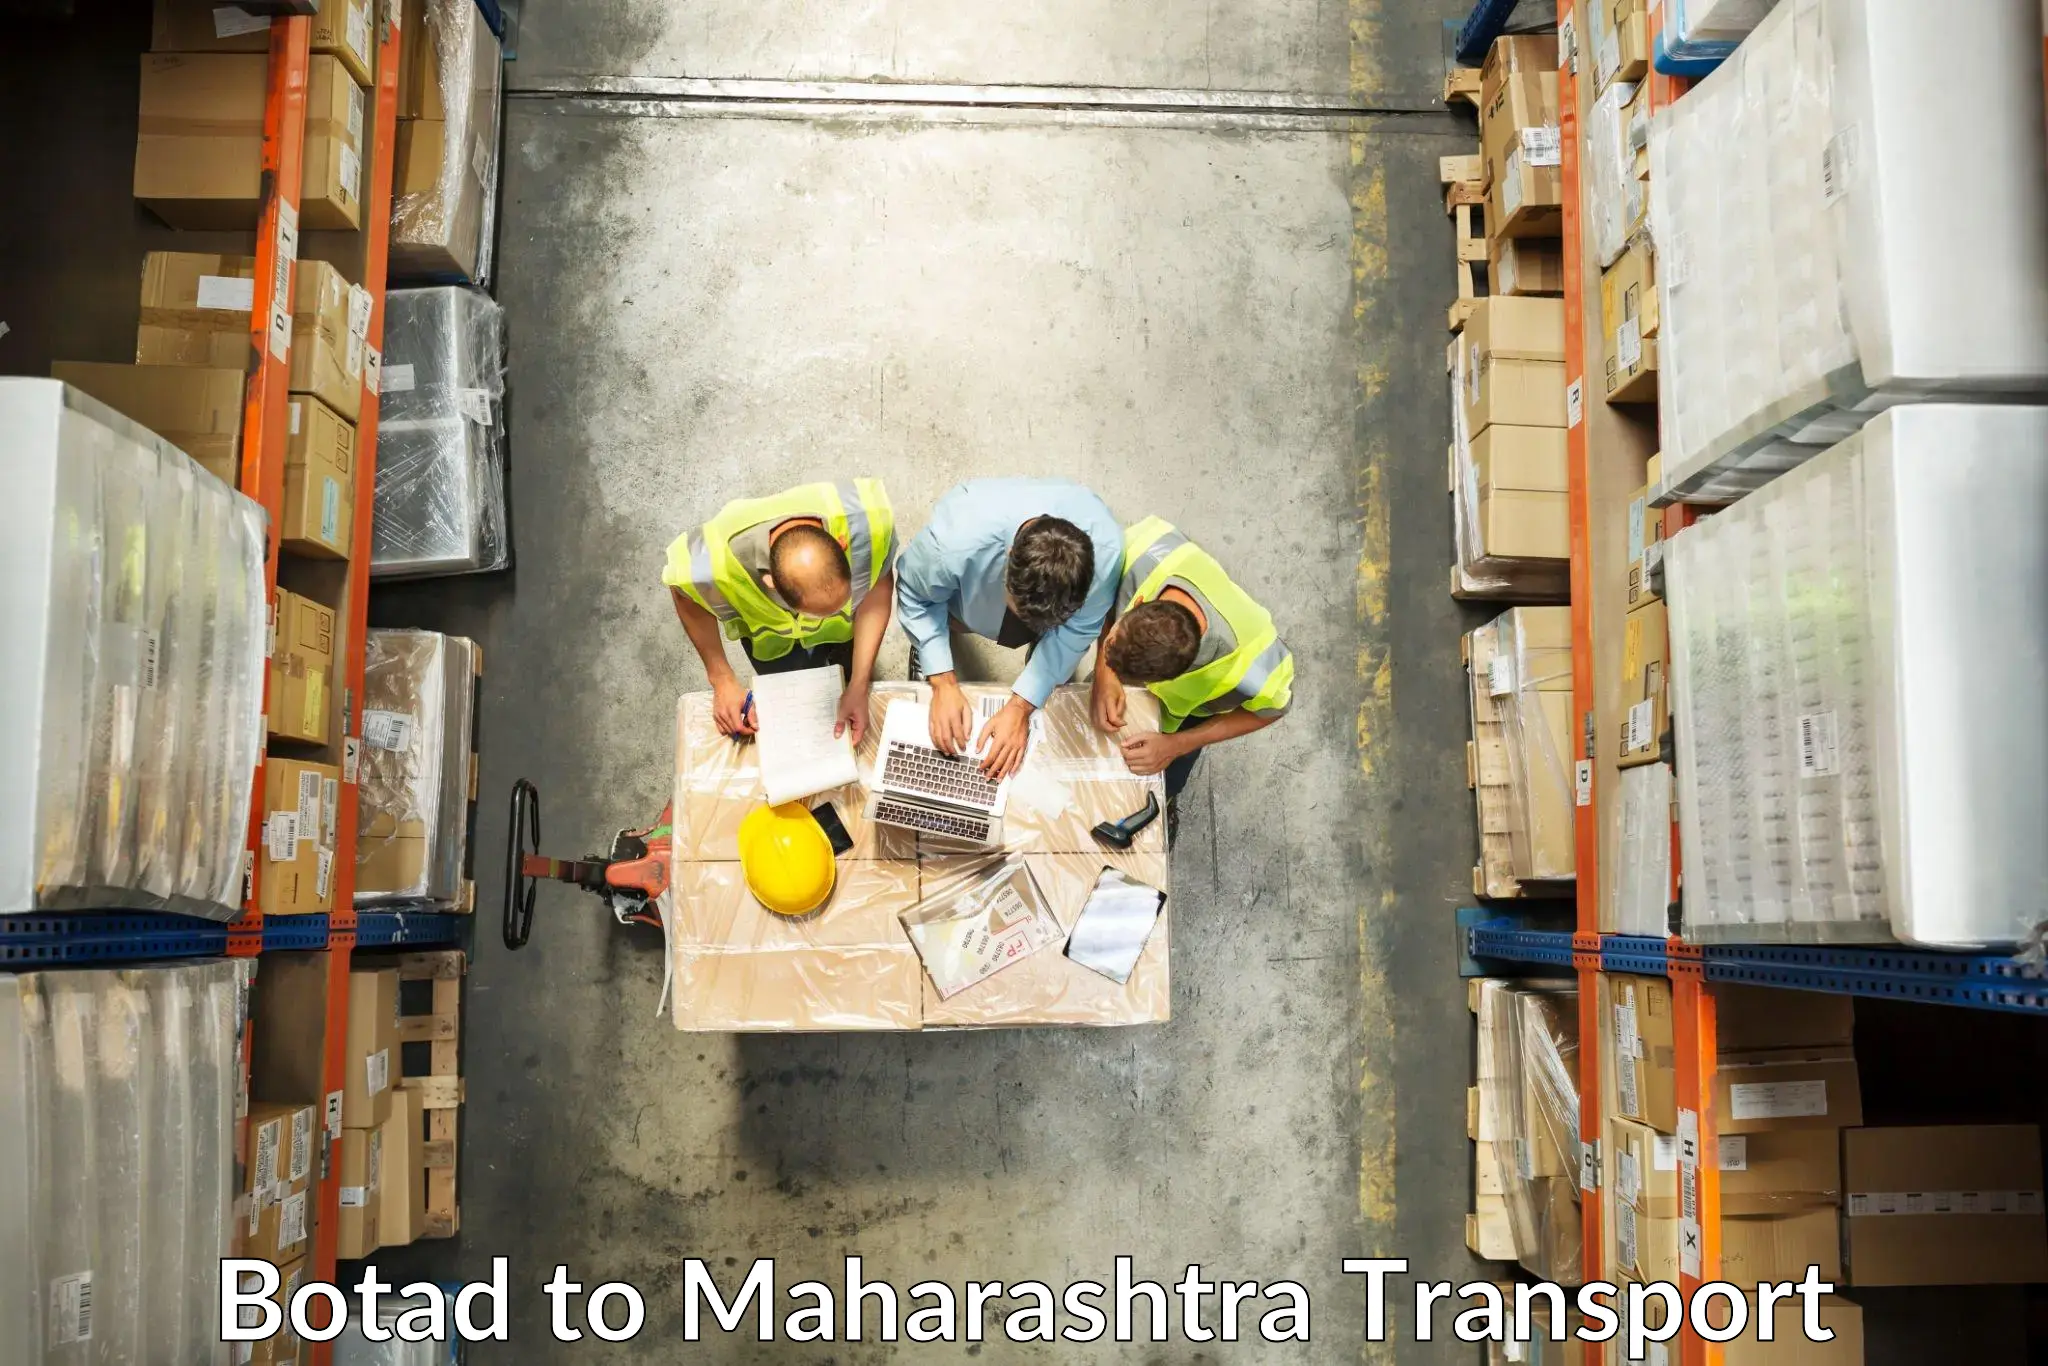 Truck transport companies in India Botad to Walchandnagar